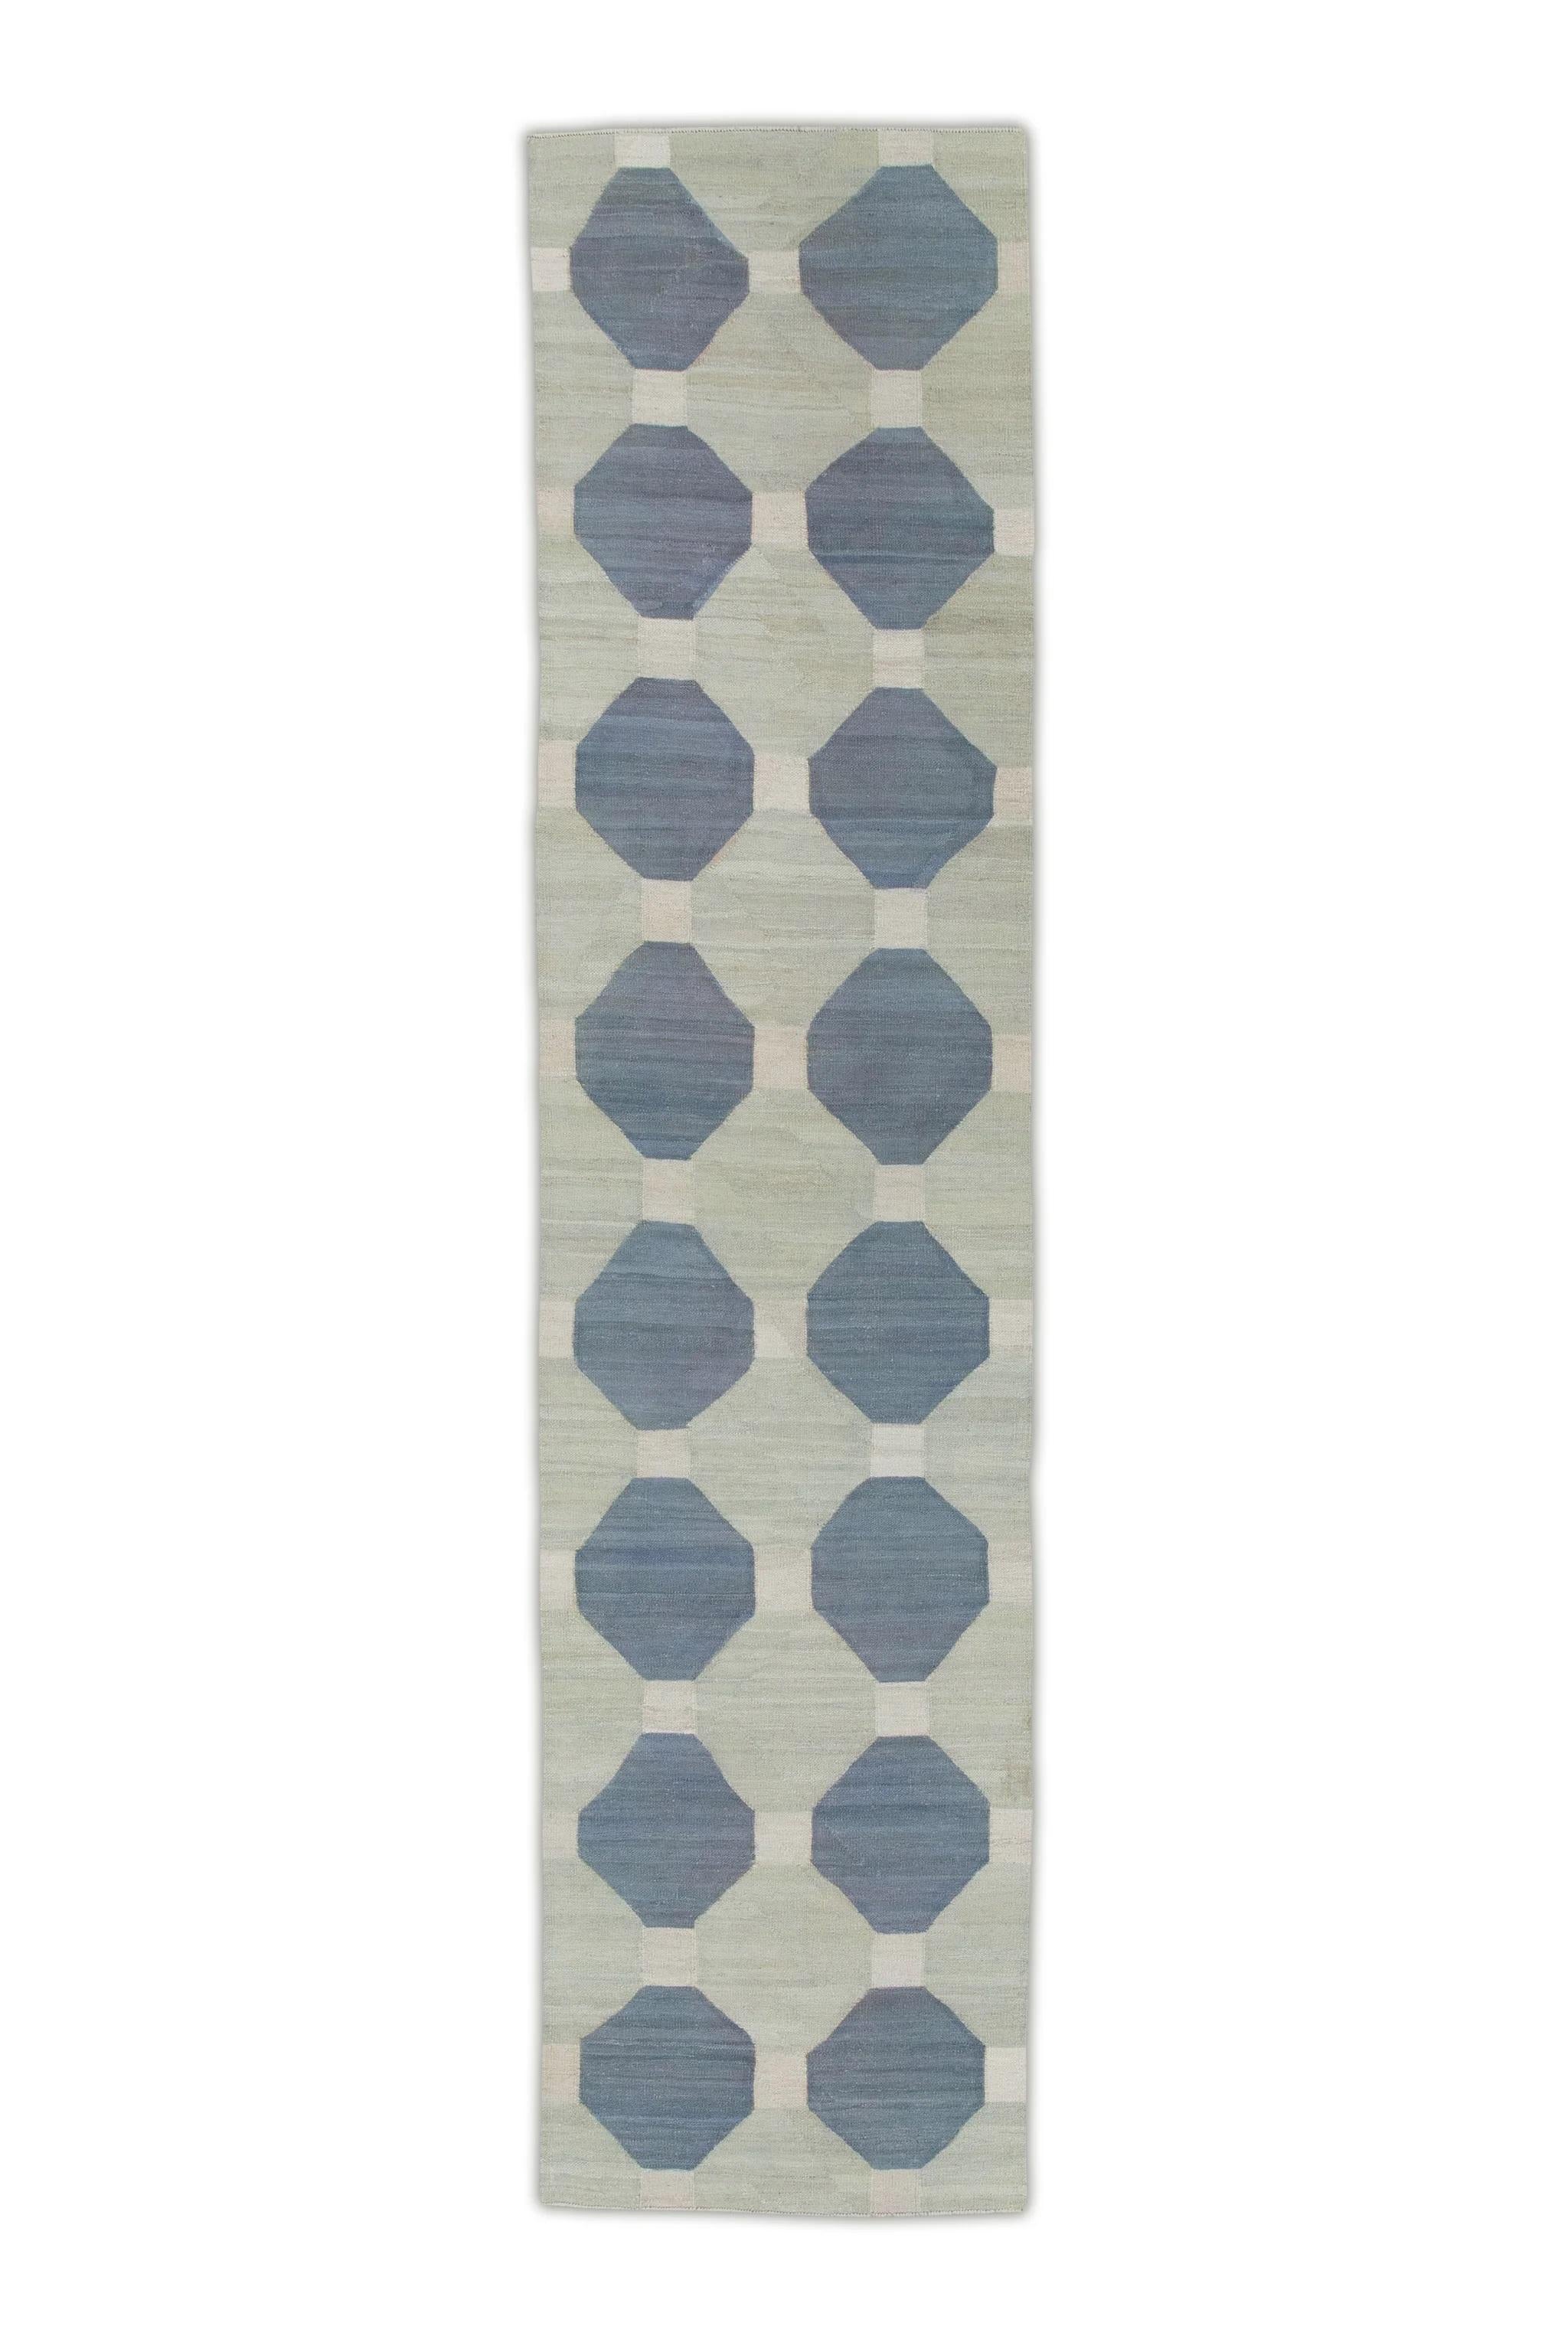 Contemporary Gray and Blue Geometric Design Flatweave Handmade Wool Runner 2'10